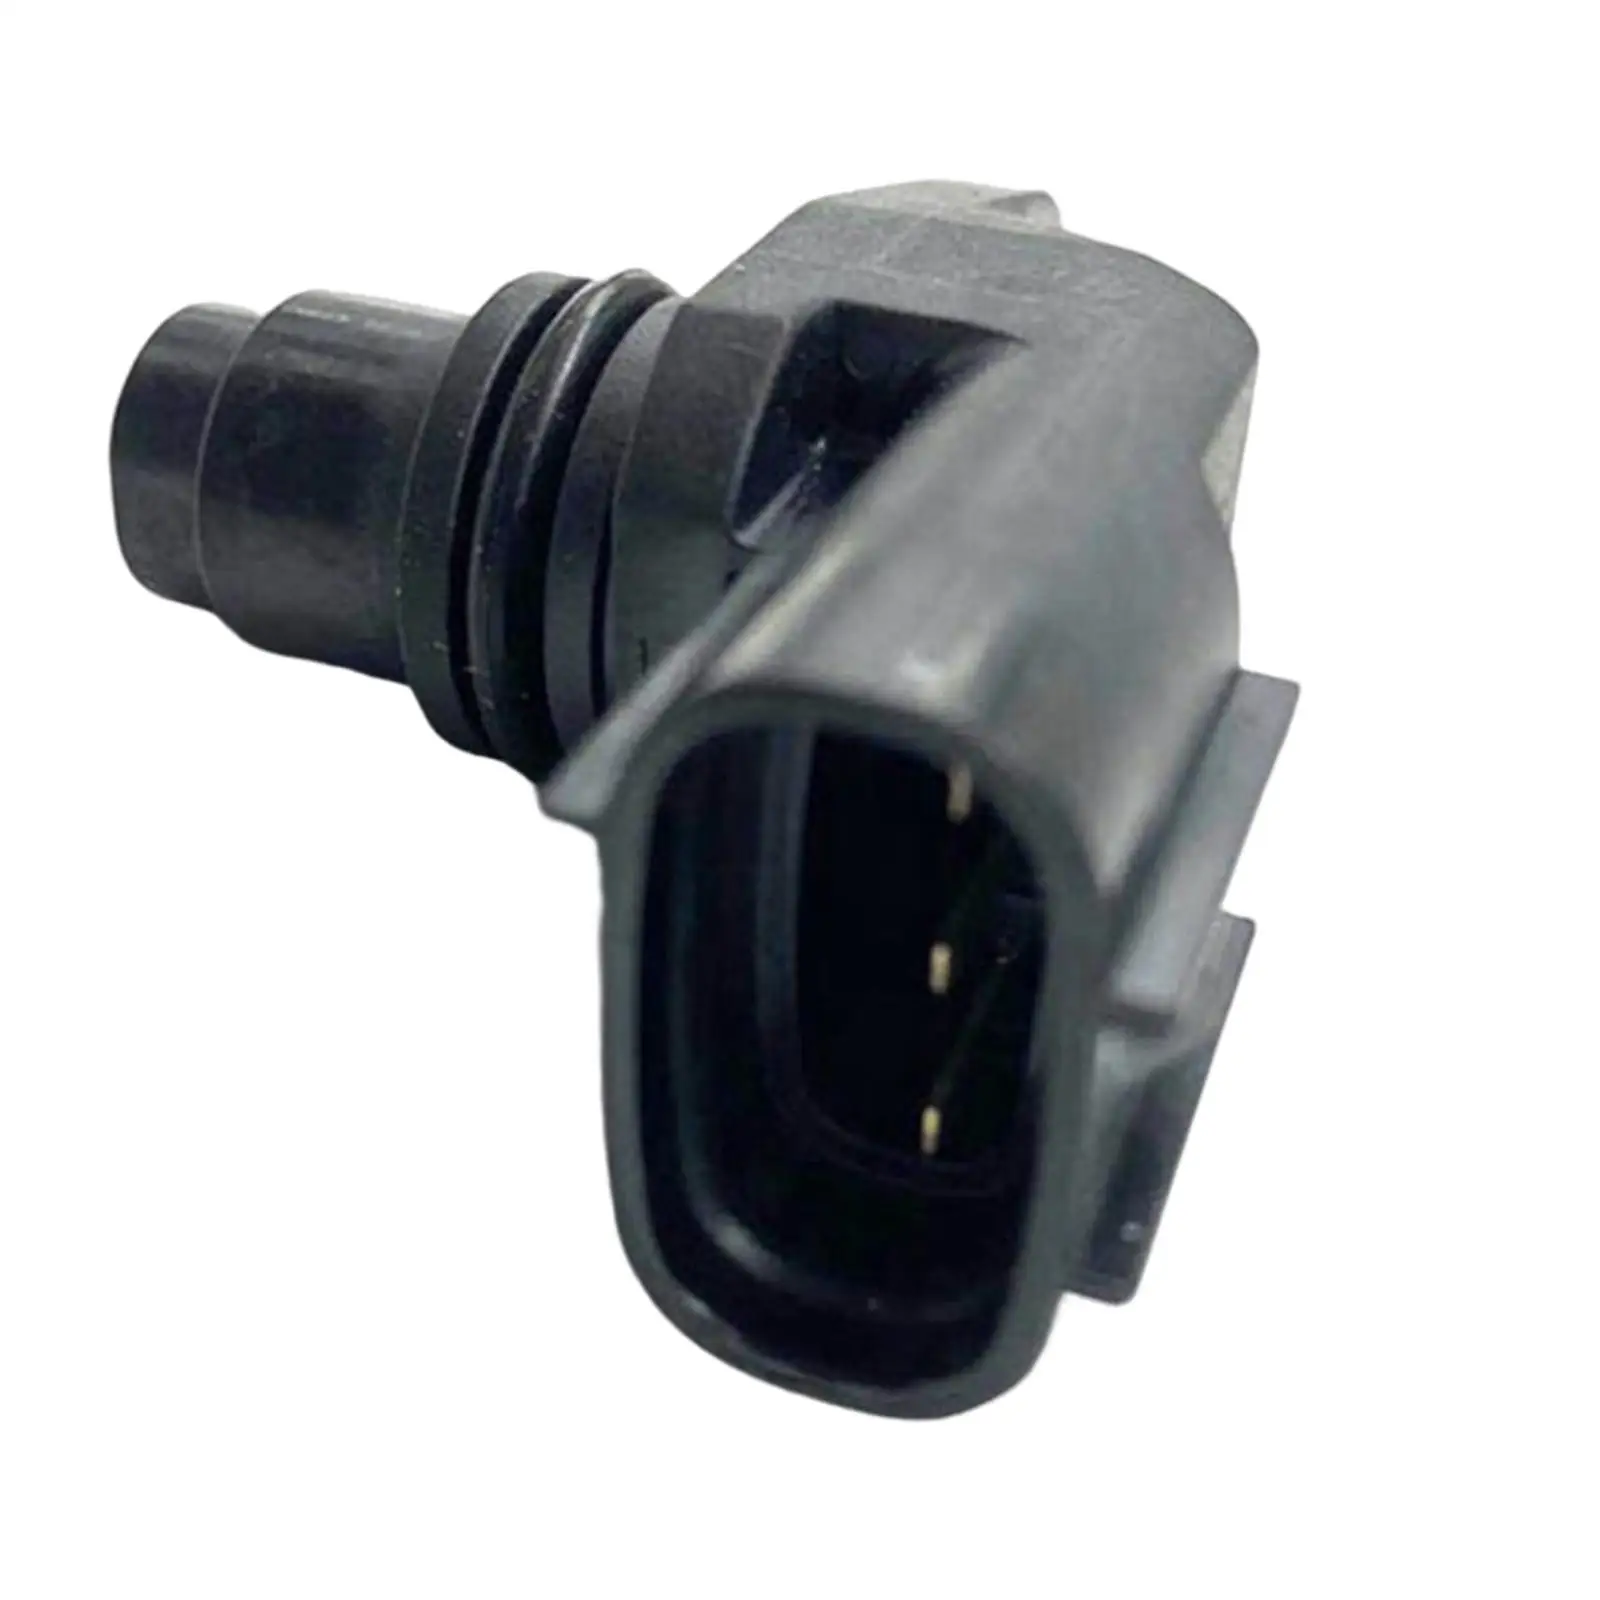 Vehicle Camshaft Position Sensor 8980190240 Replace Fits for Isuzu 4HK1